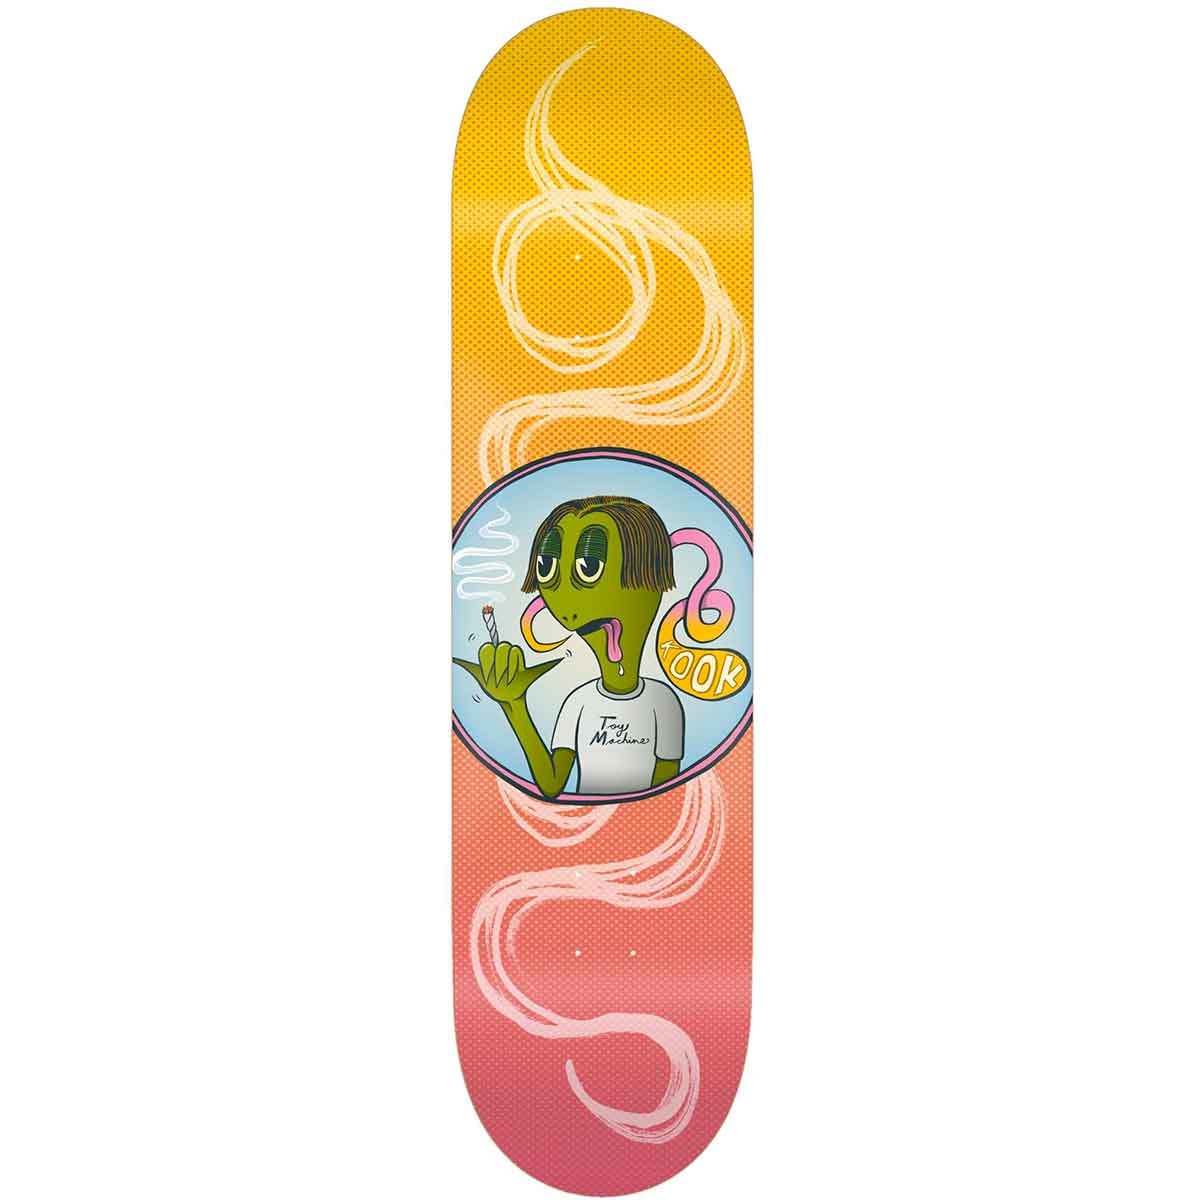 Toy Machine Mad Eye Skateboard complet Orange 8,5